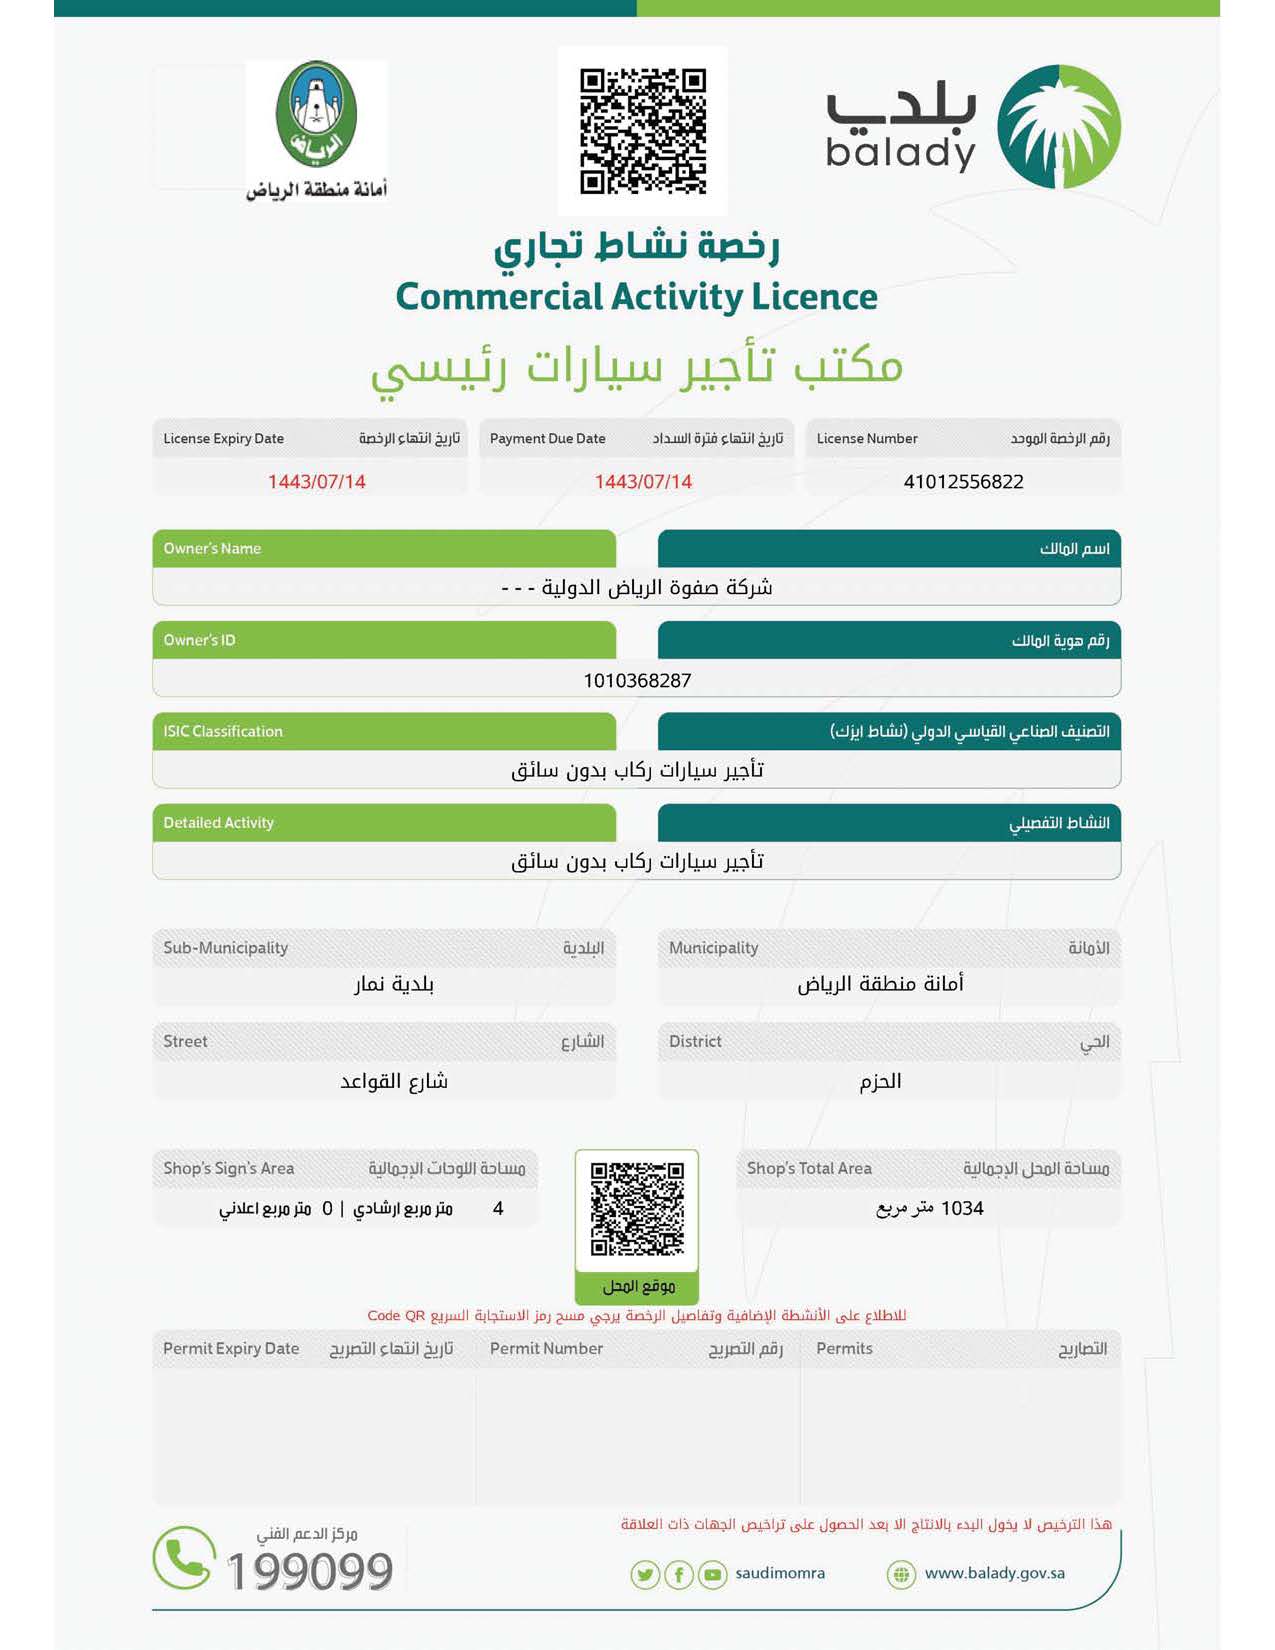 البلديات Page 01 One of the leading companies and a significant number in all its fields